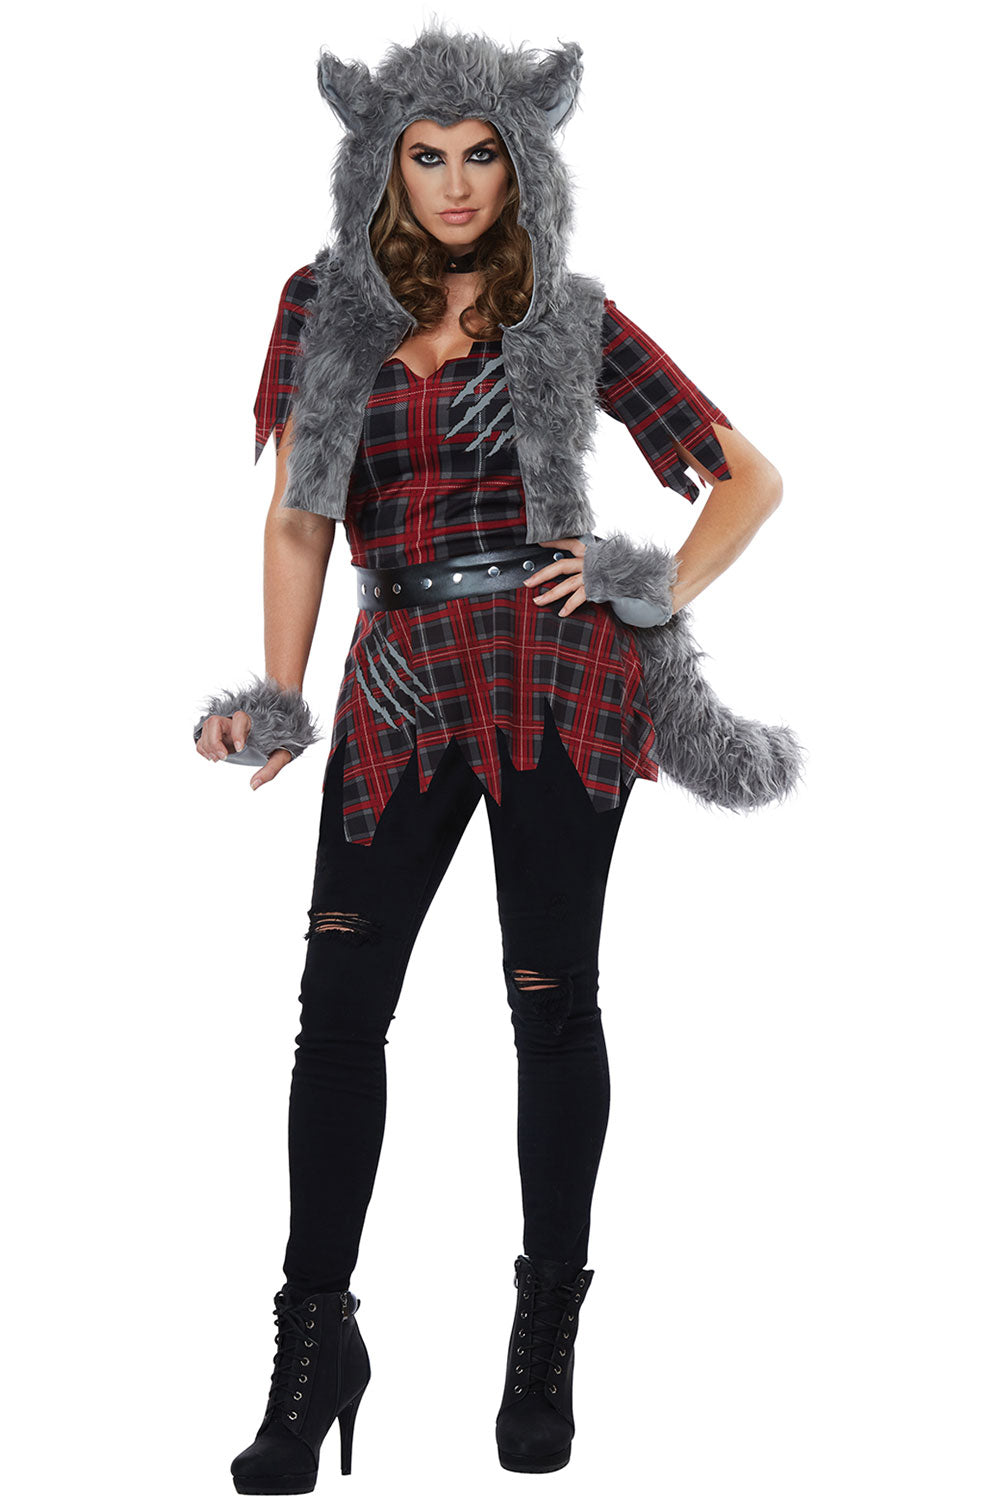 SHE-WOLF/ADULT California Costume 00740